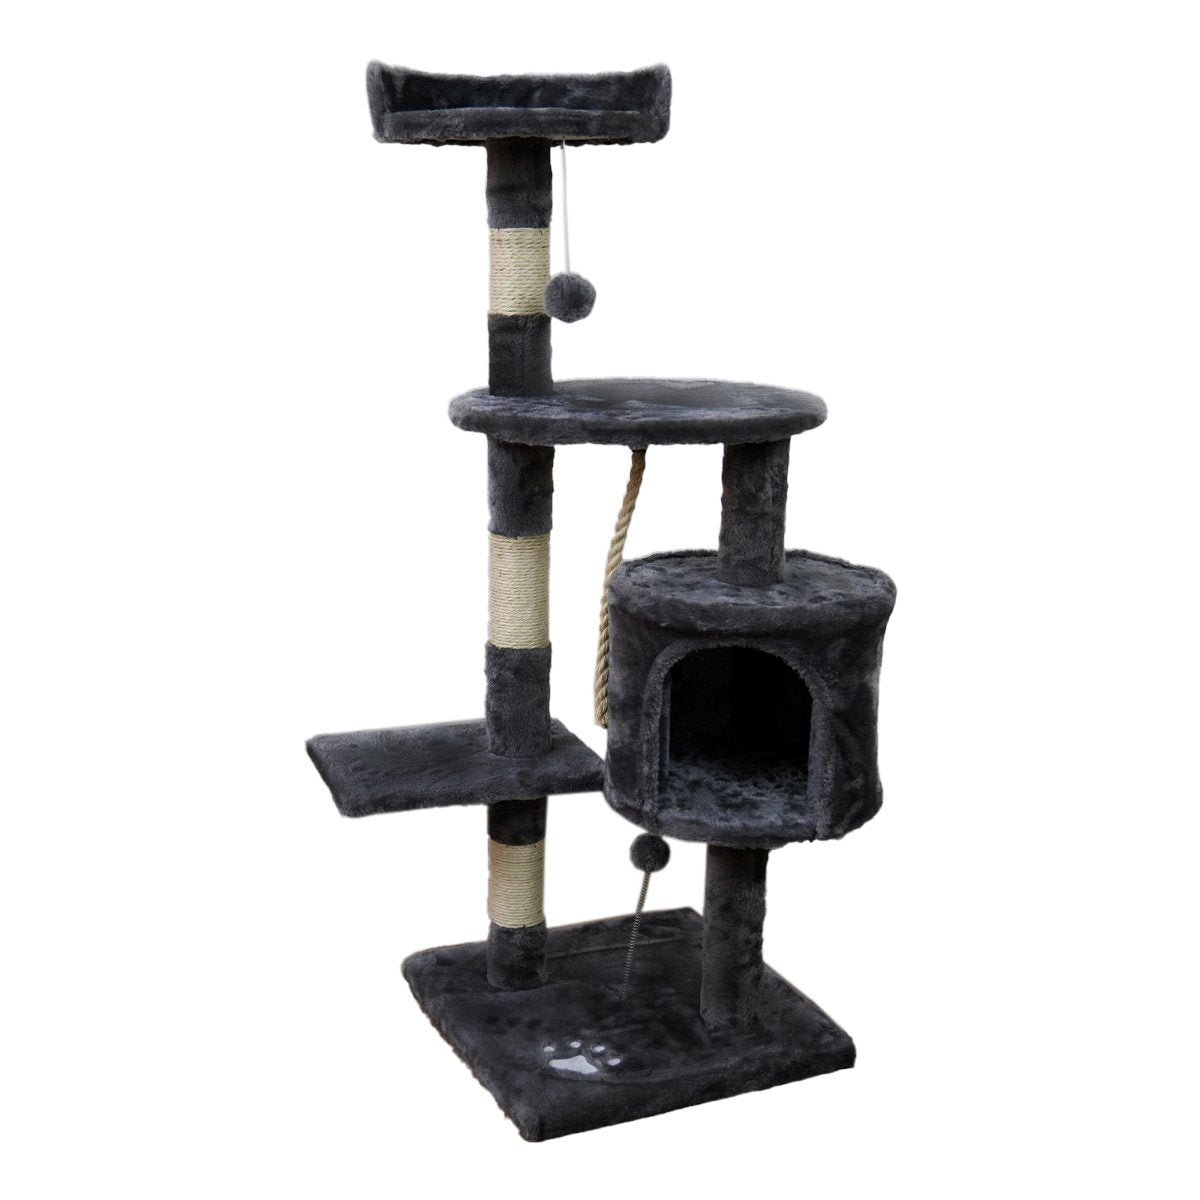 110cm Furtastic Cat Tree Scratching Post - Dark Grey | Stylish Kitty Playground